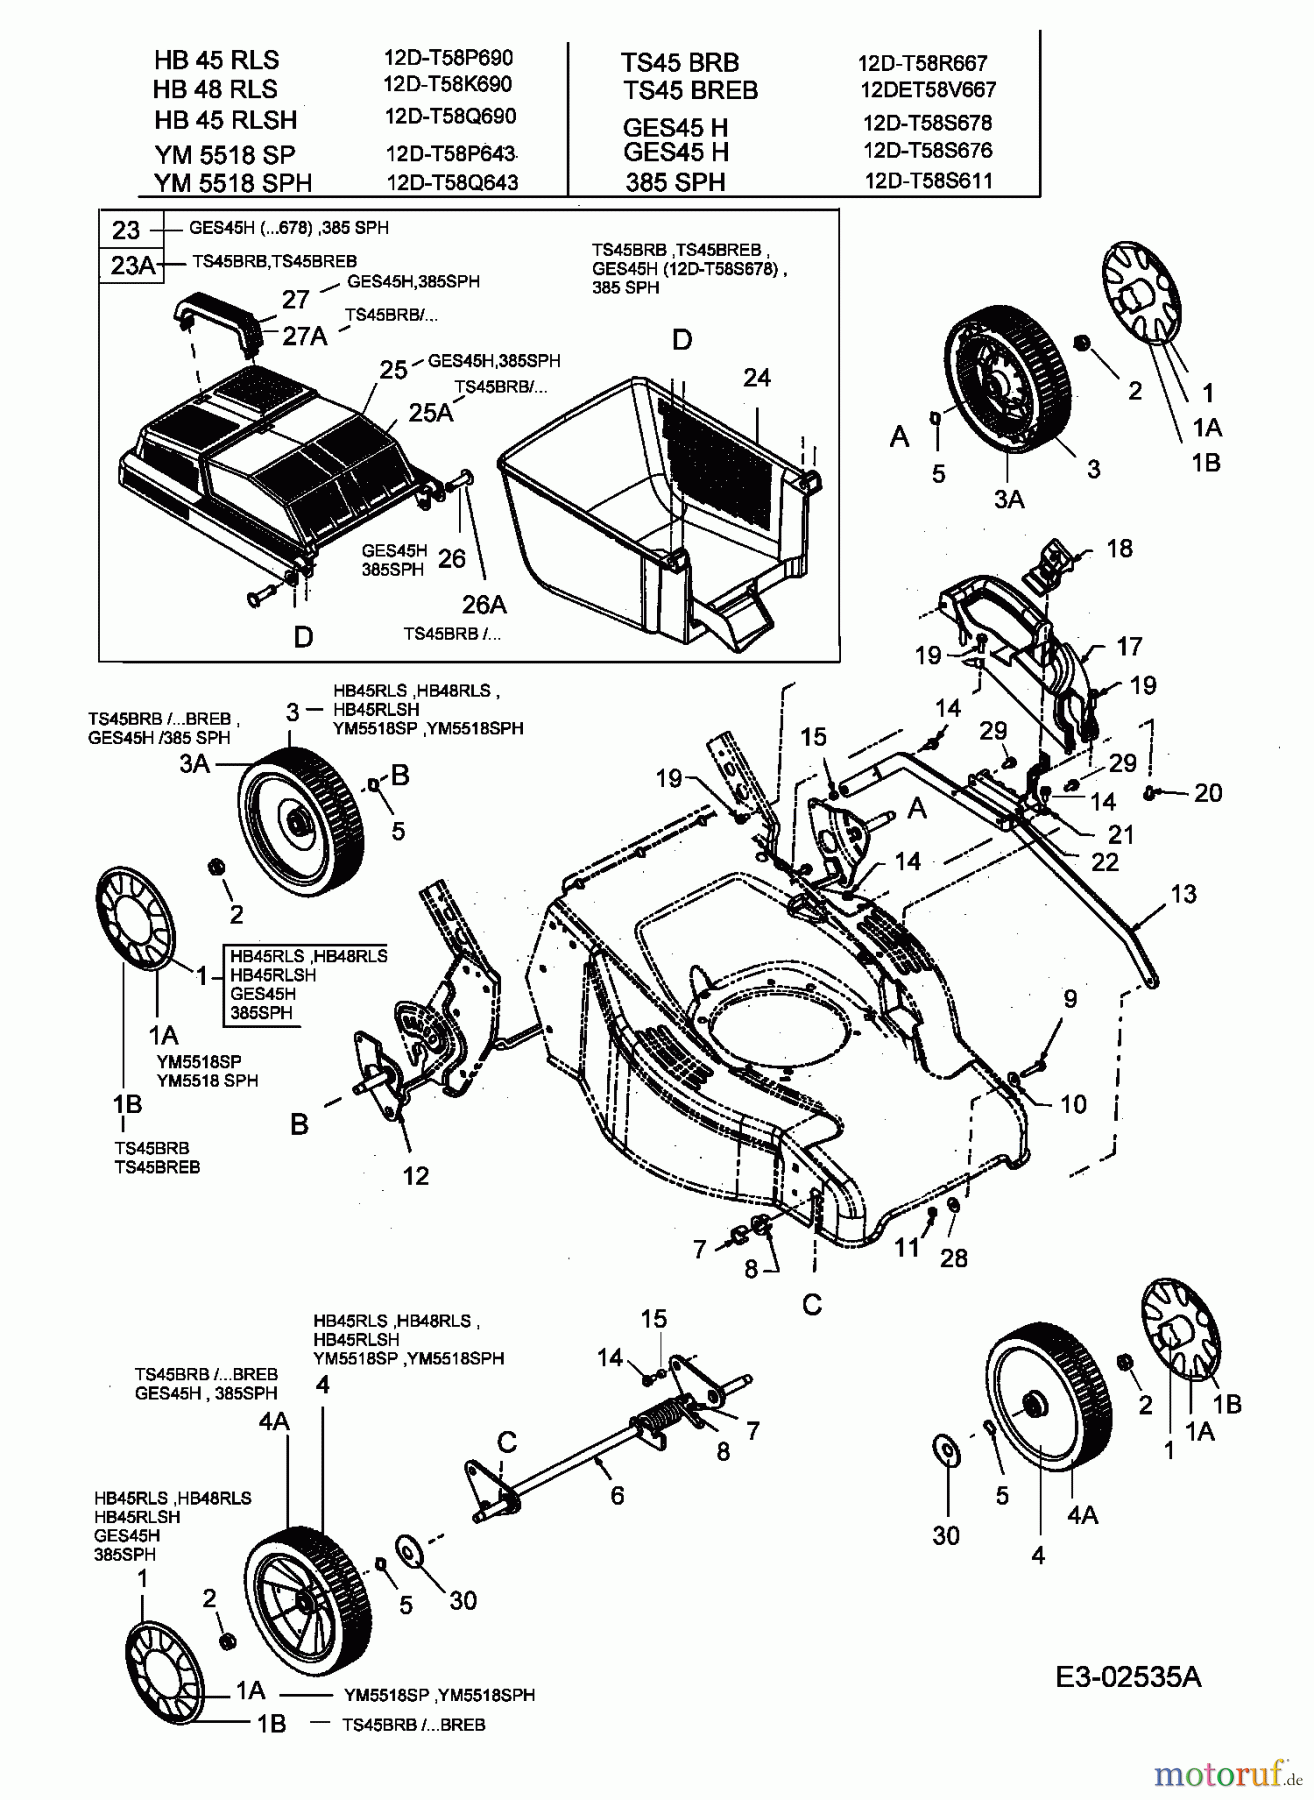  Turbo Silent Petrol mower self propelled TS 45 BR-B 12D-T58R667  (2005) Grass catcher, Hight adjustment, Wheels